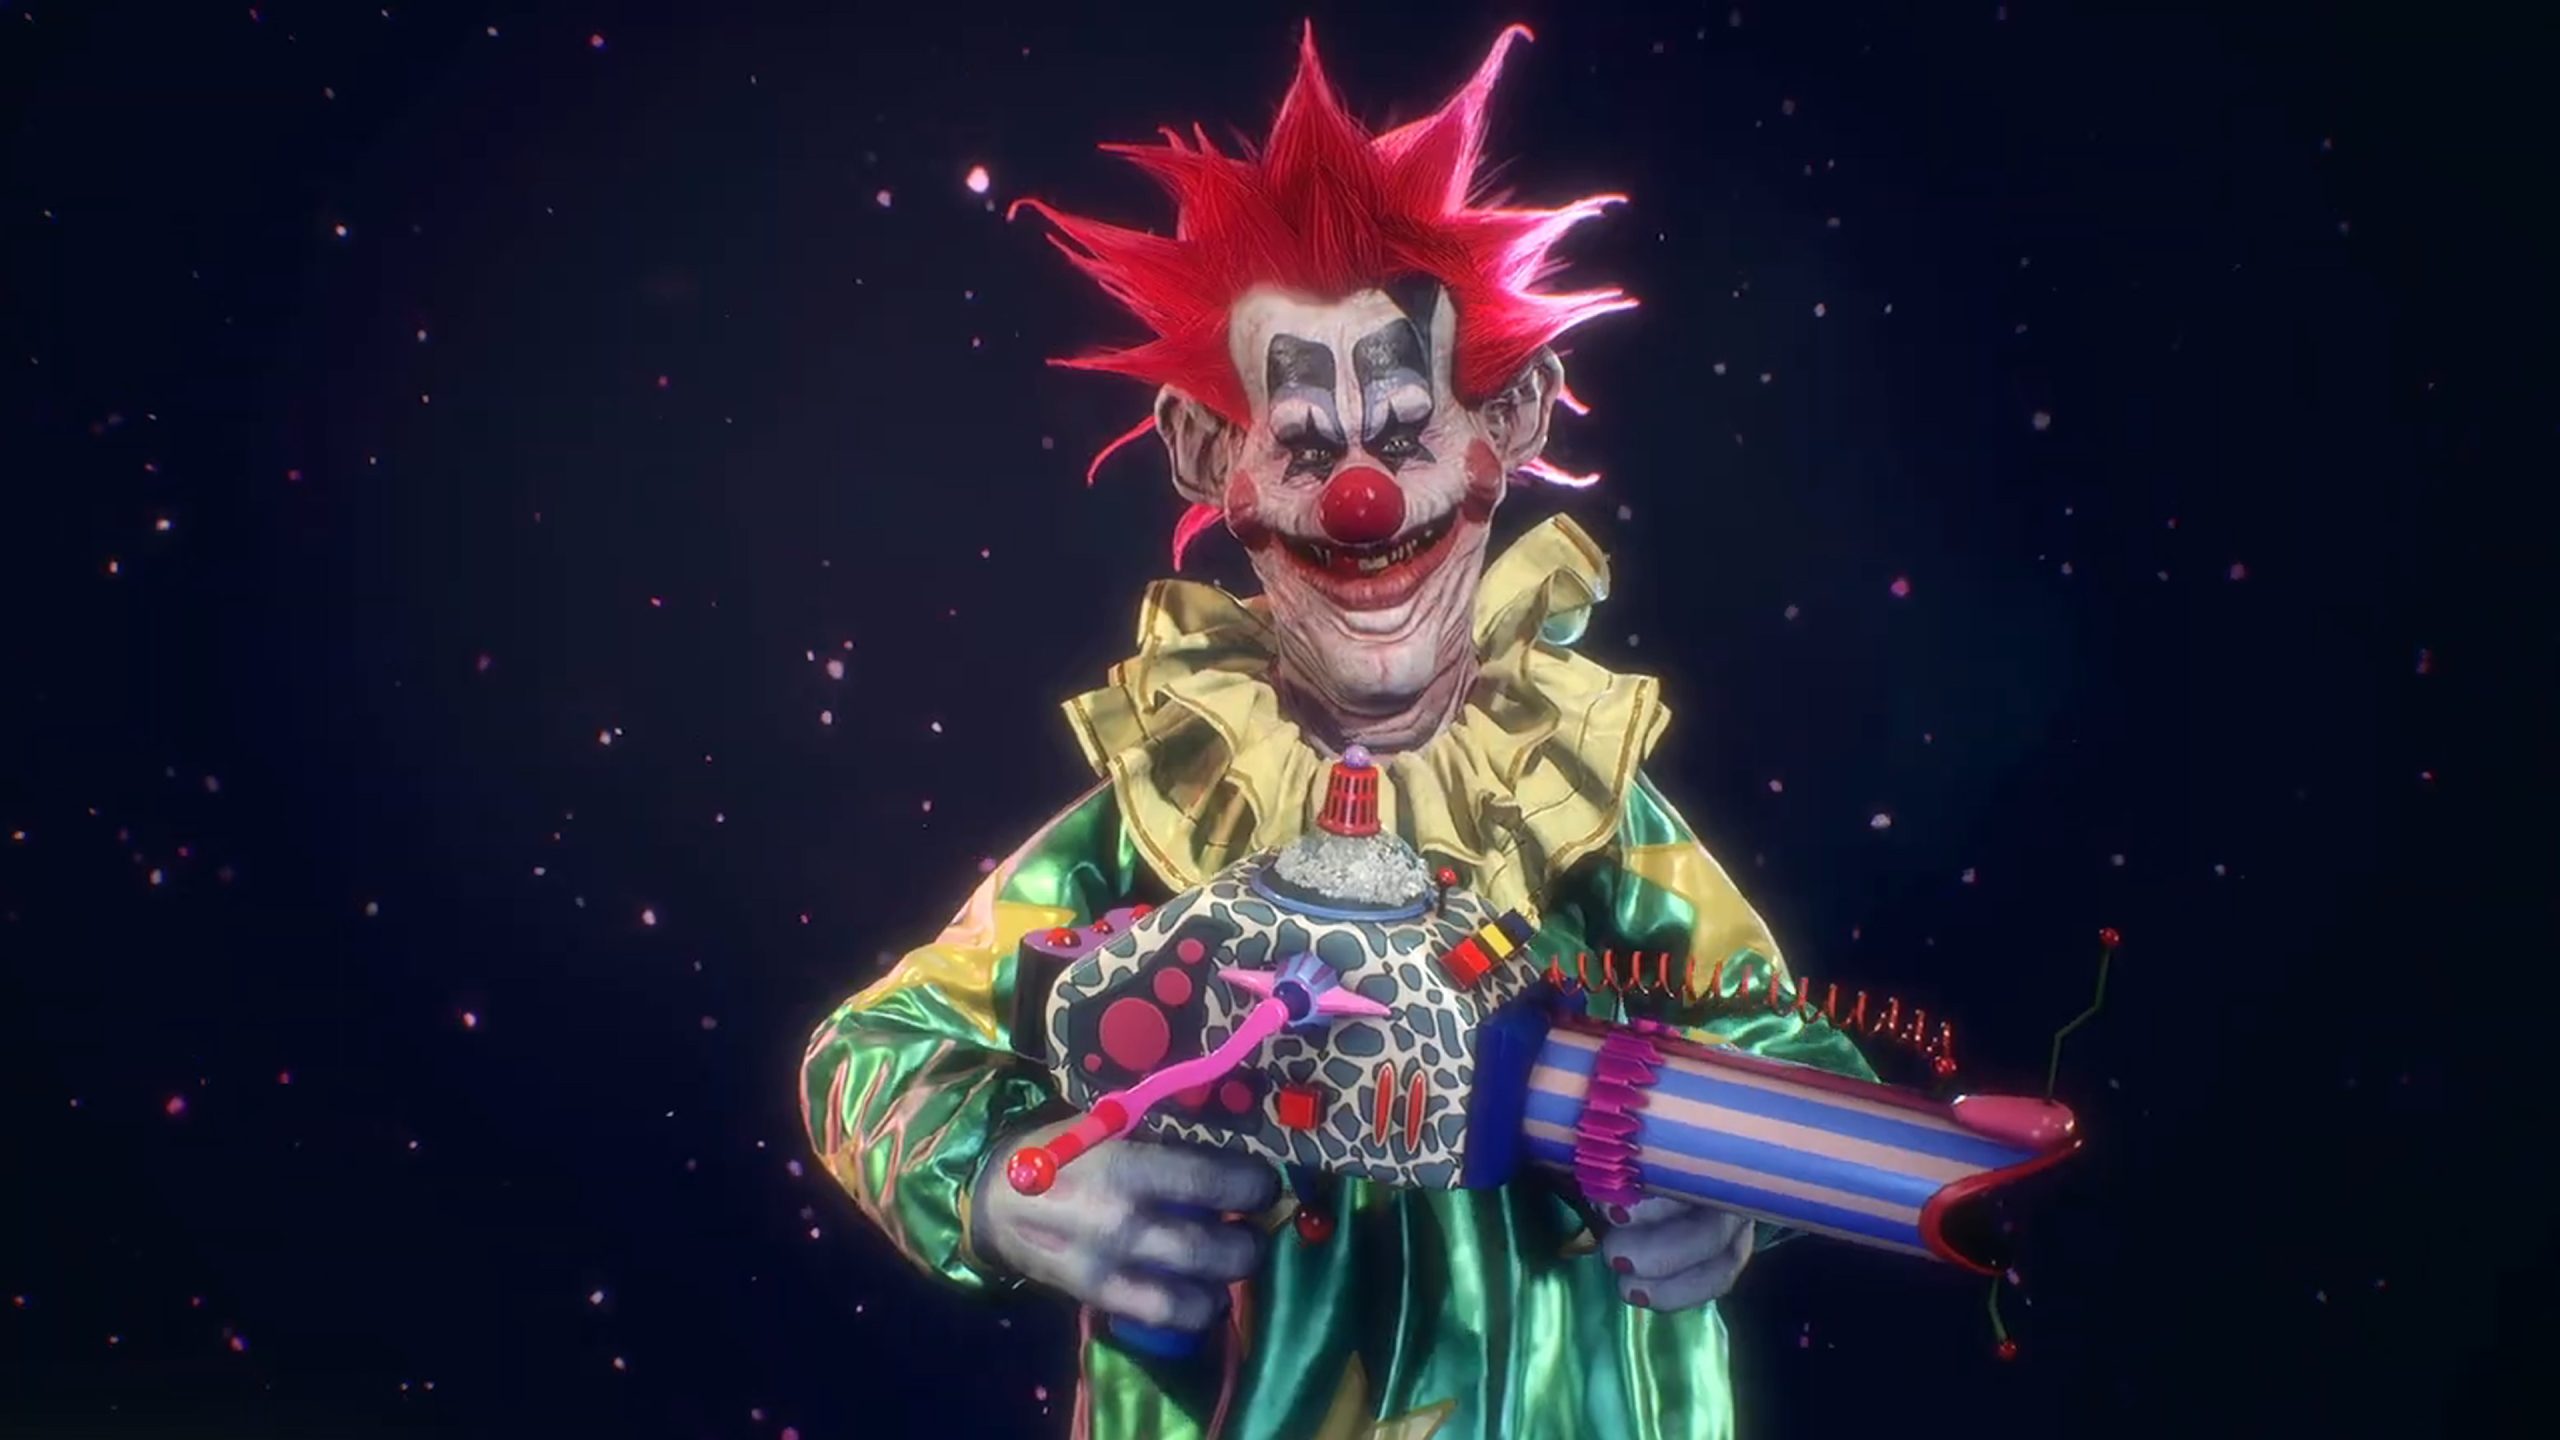 Killer klowns from outer. Клоуны-убийцы из космоса. Клоуны-убийцы из космоса игра. Клоун игра. Killer Klowns from Outer Space the game.